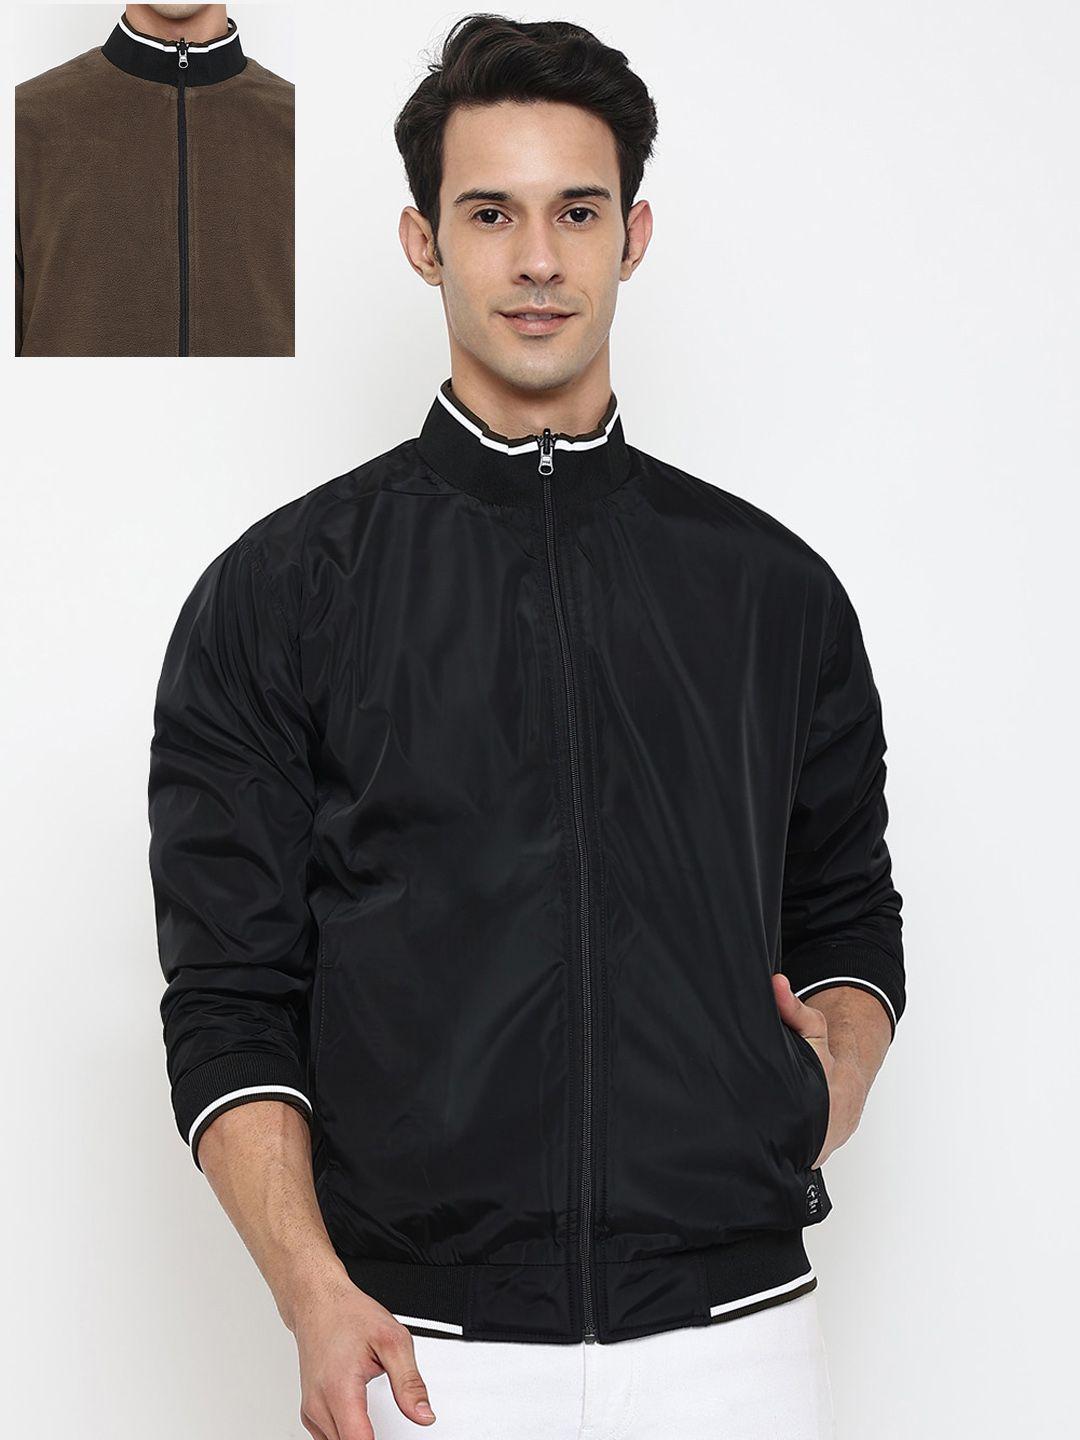 cantabil-men-black-&-brown-reversible-bomber-jacket